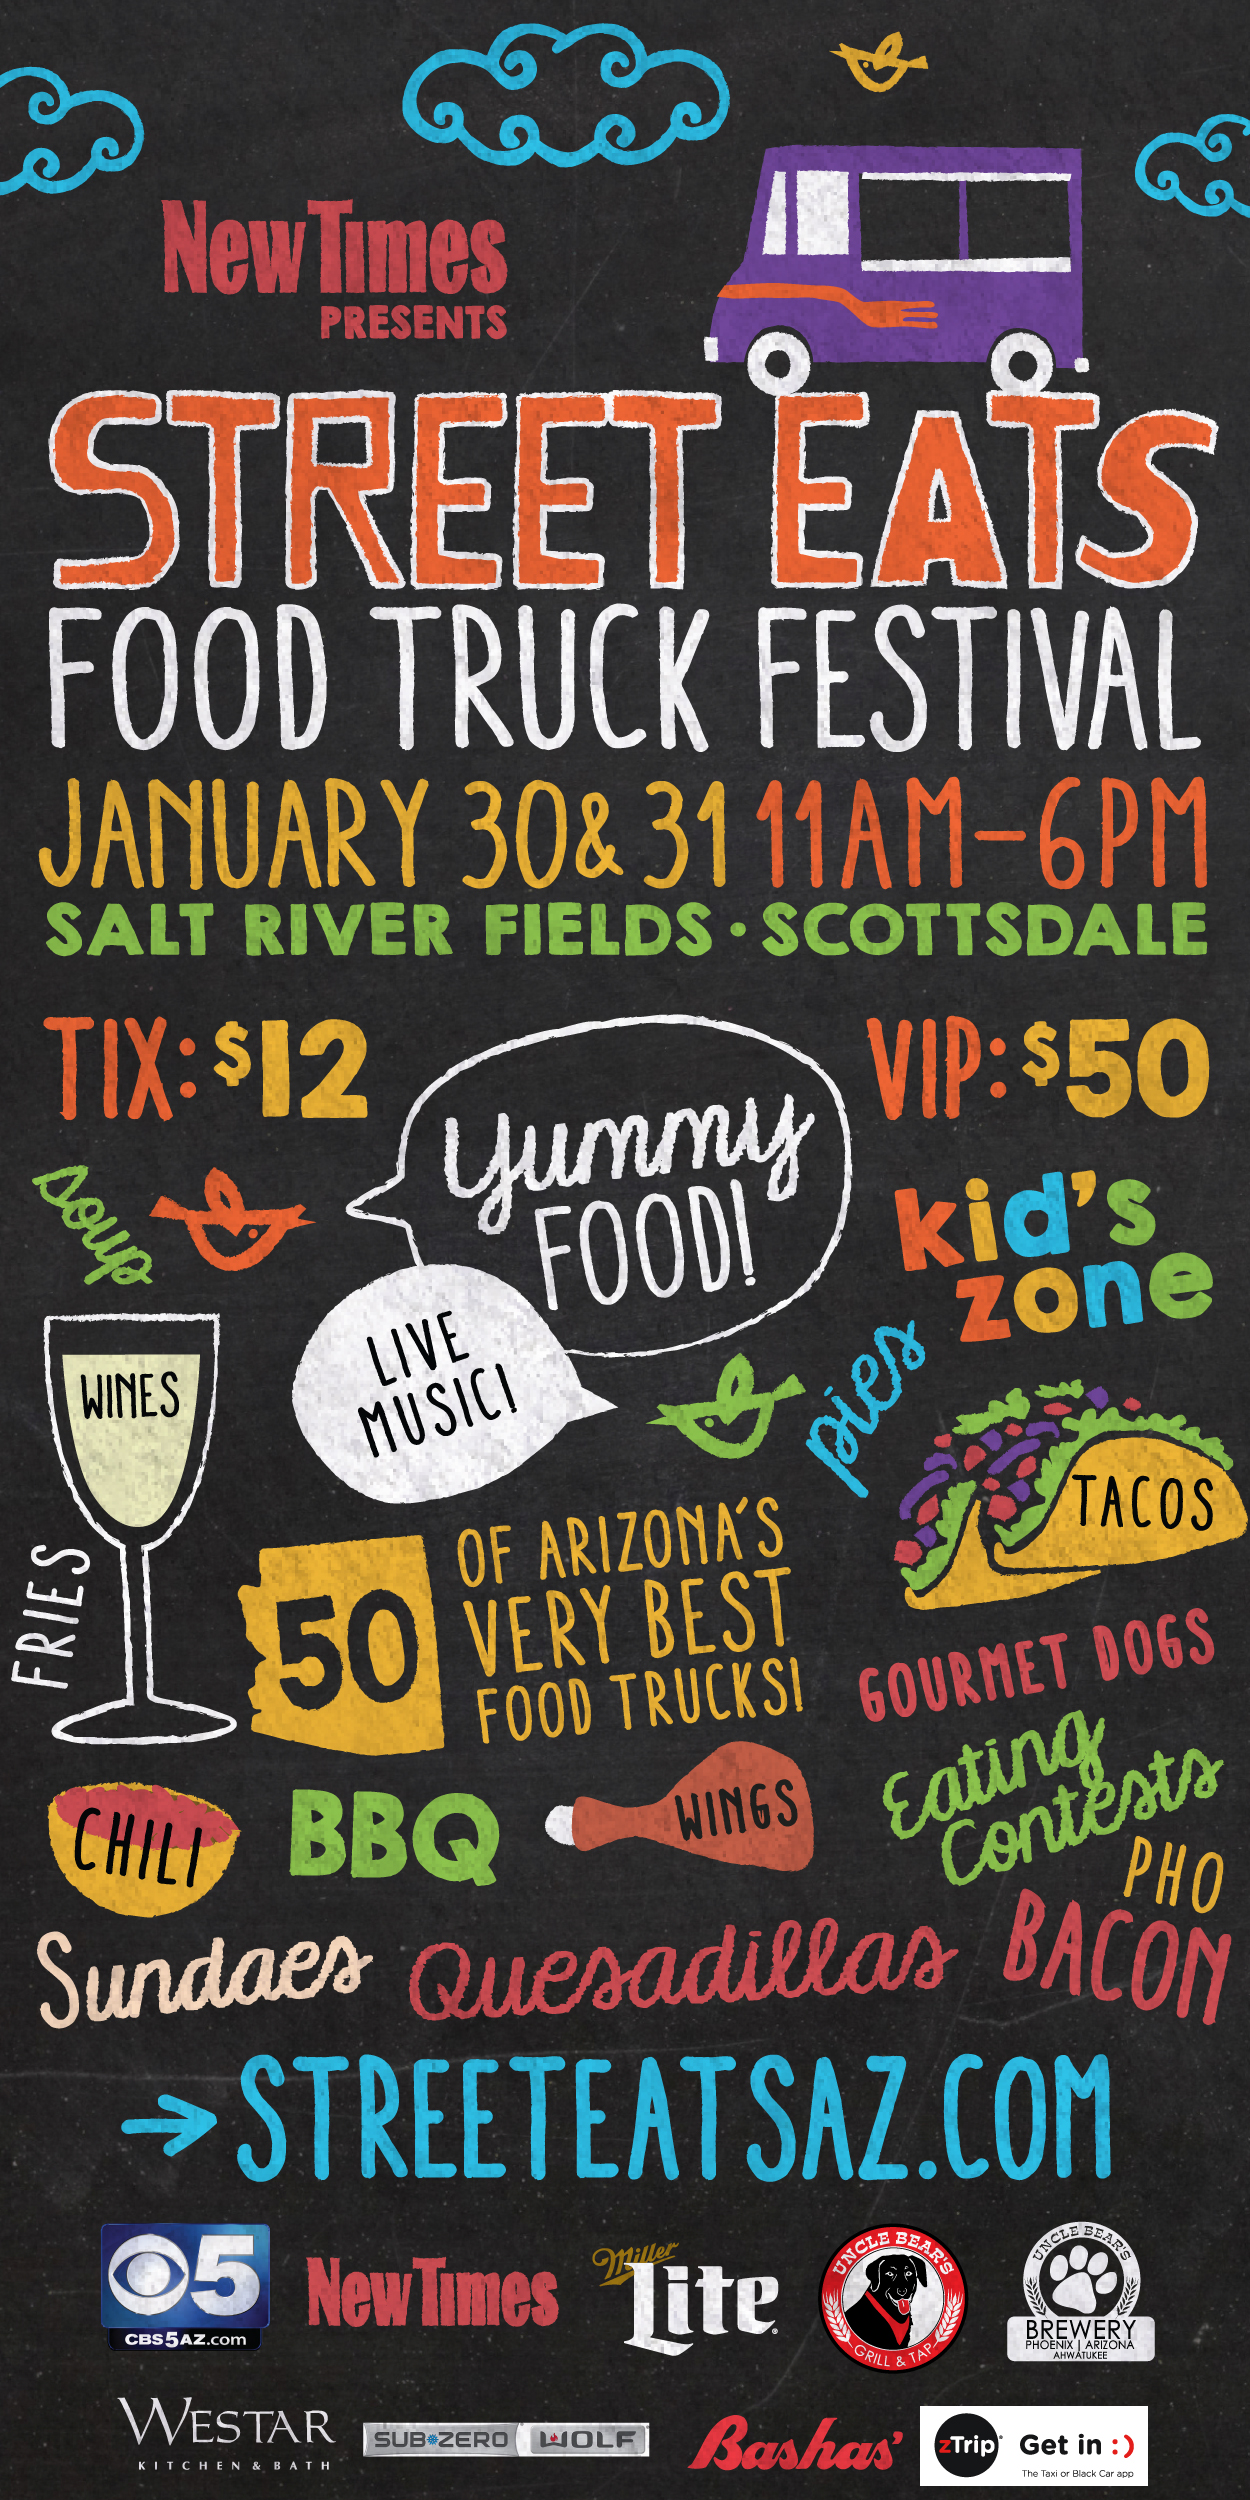 Street Eats Food Truck Festival taking place near Scottsdale golf homes